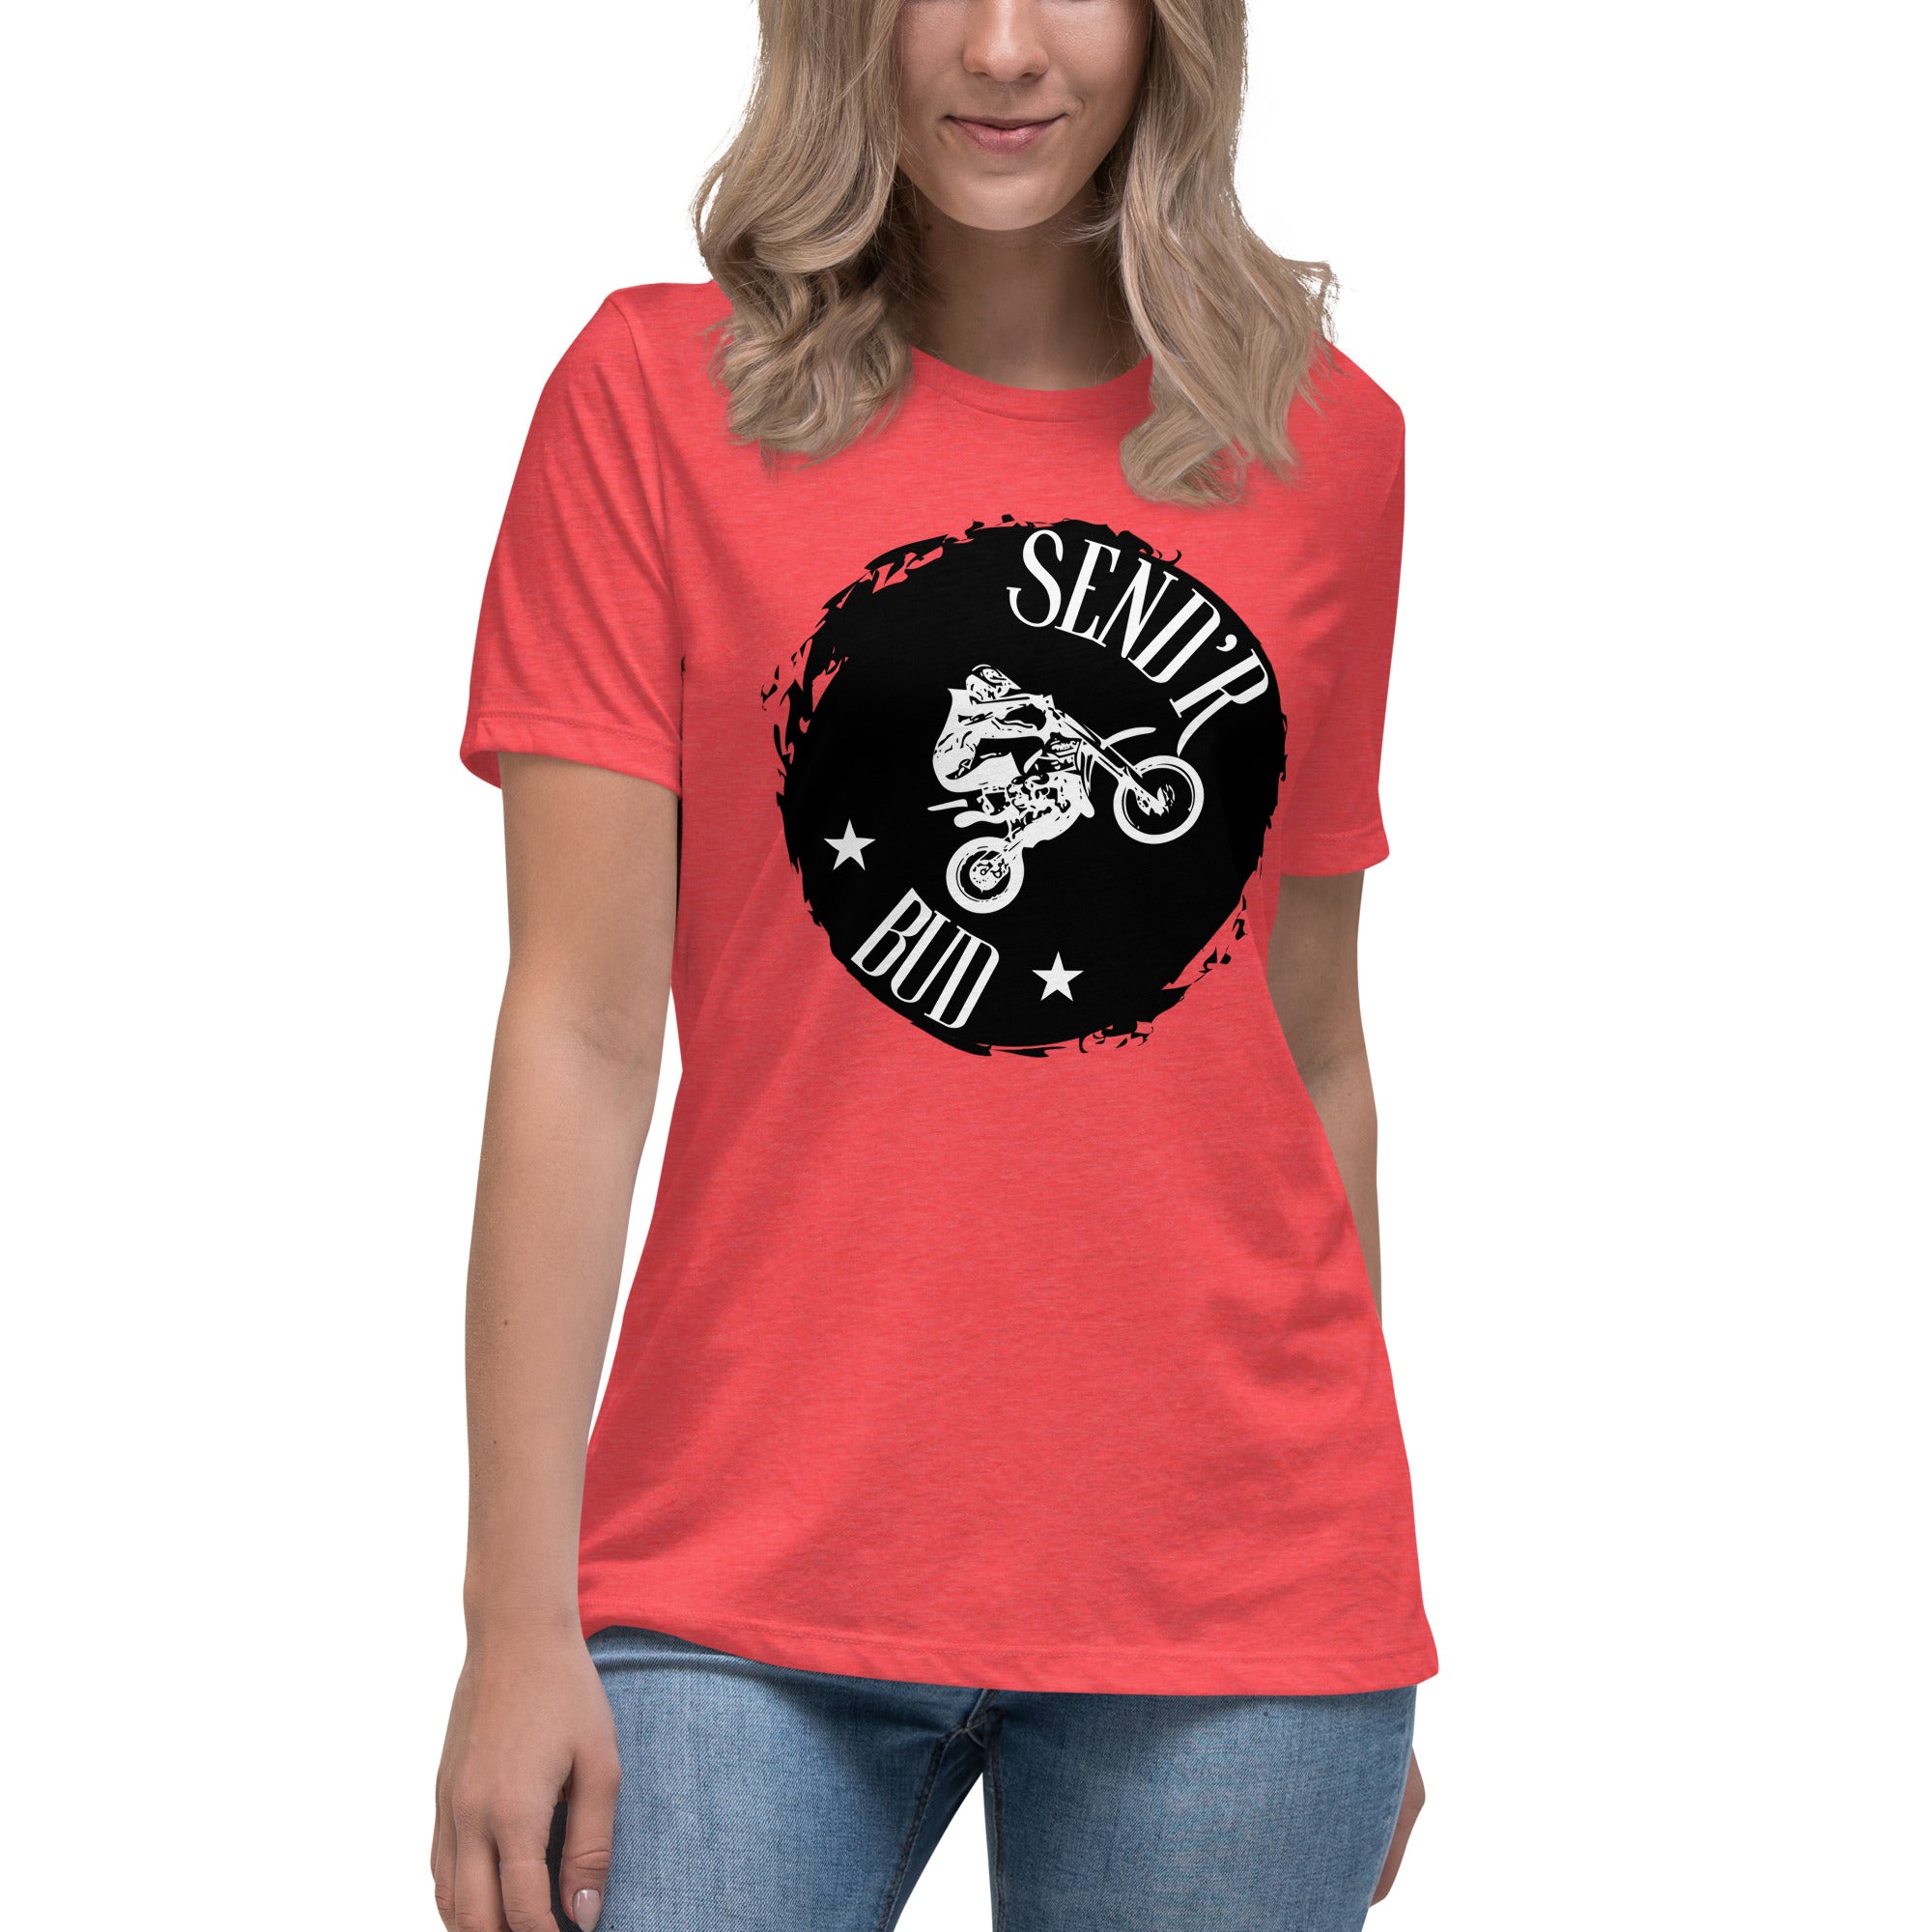 Send'r Bud Women's Premium T-Shirt